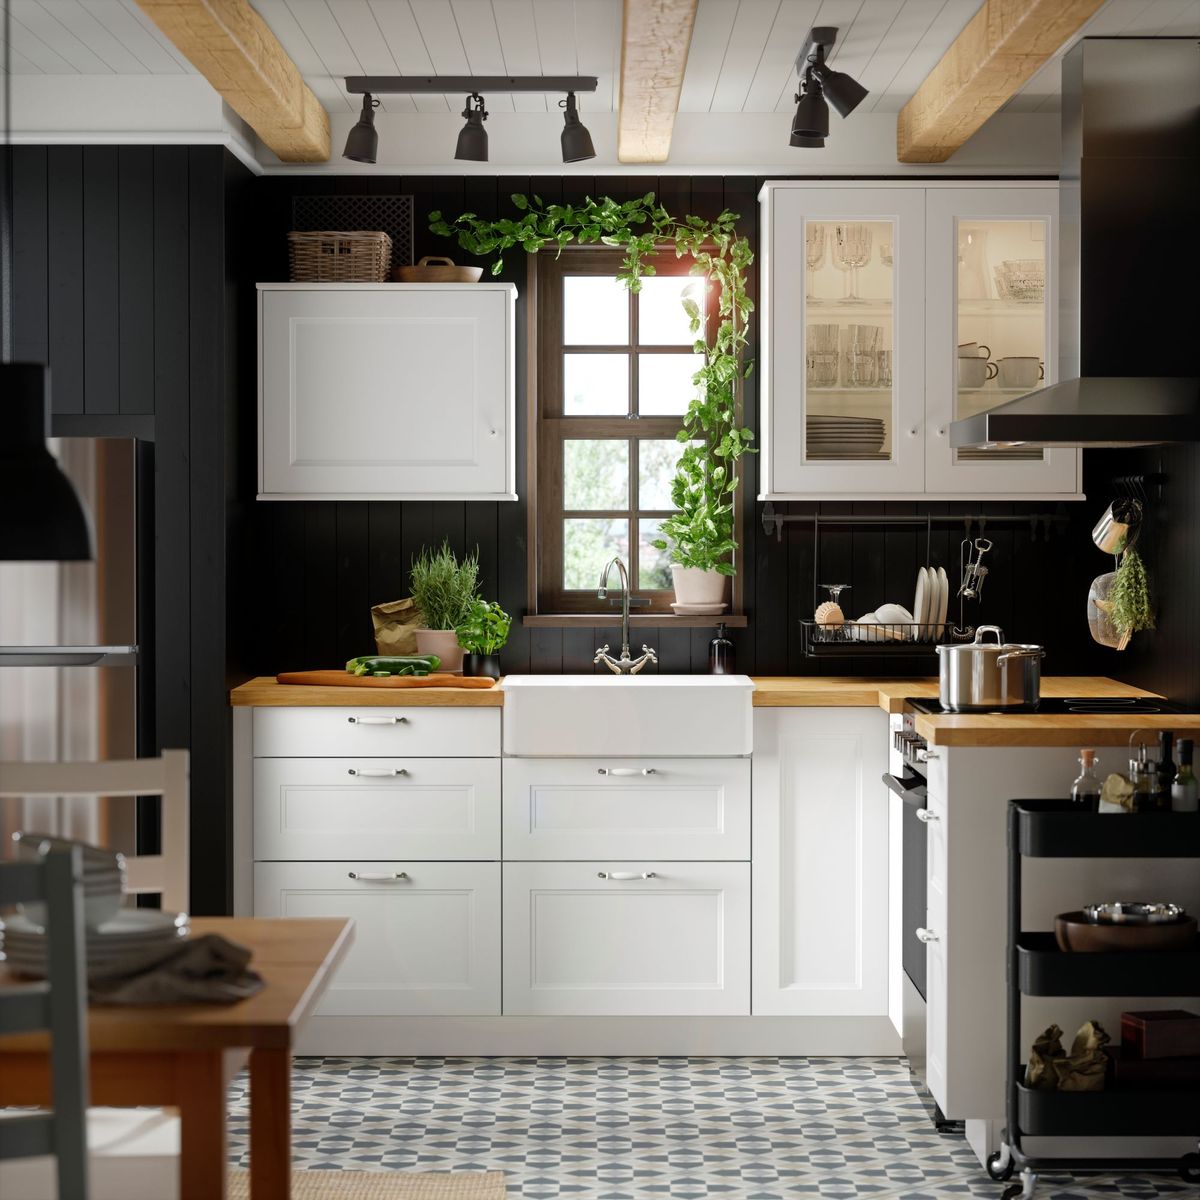 IKEA launches affordable interior design service